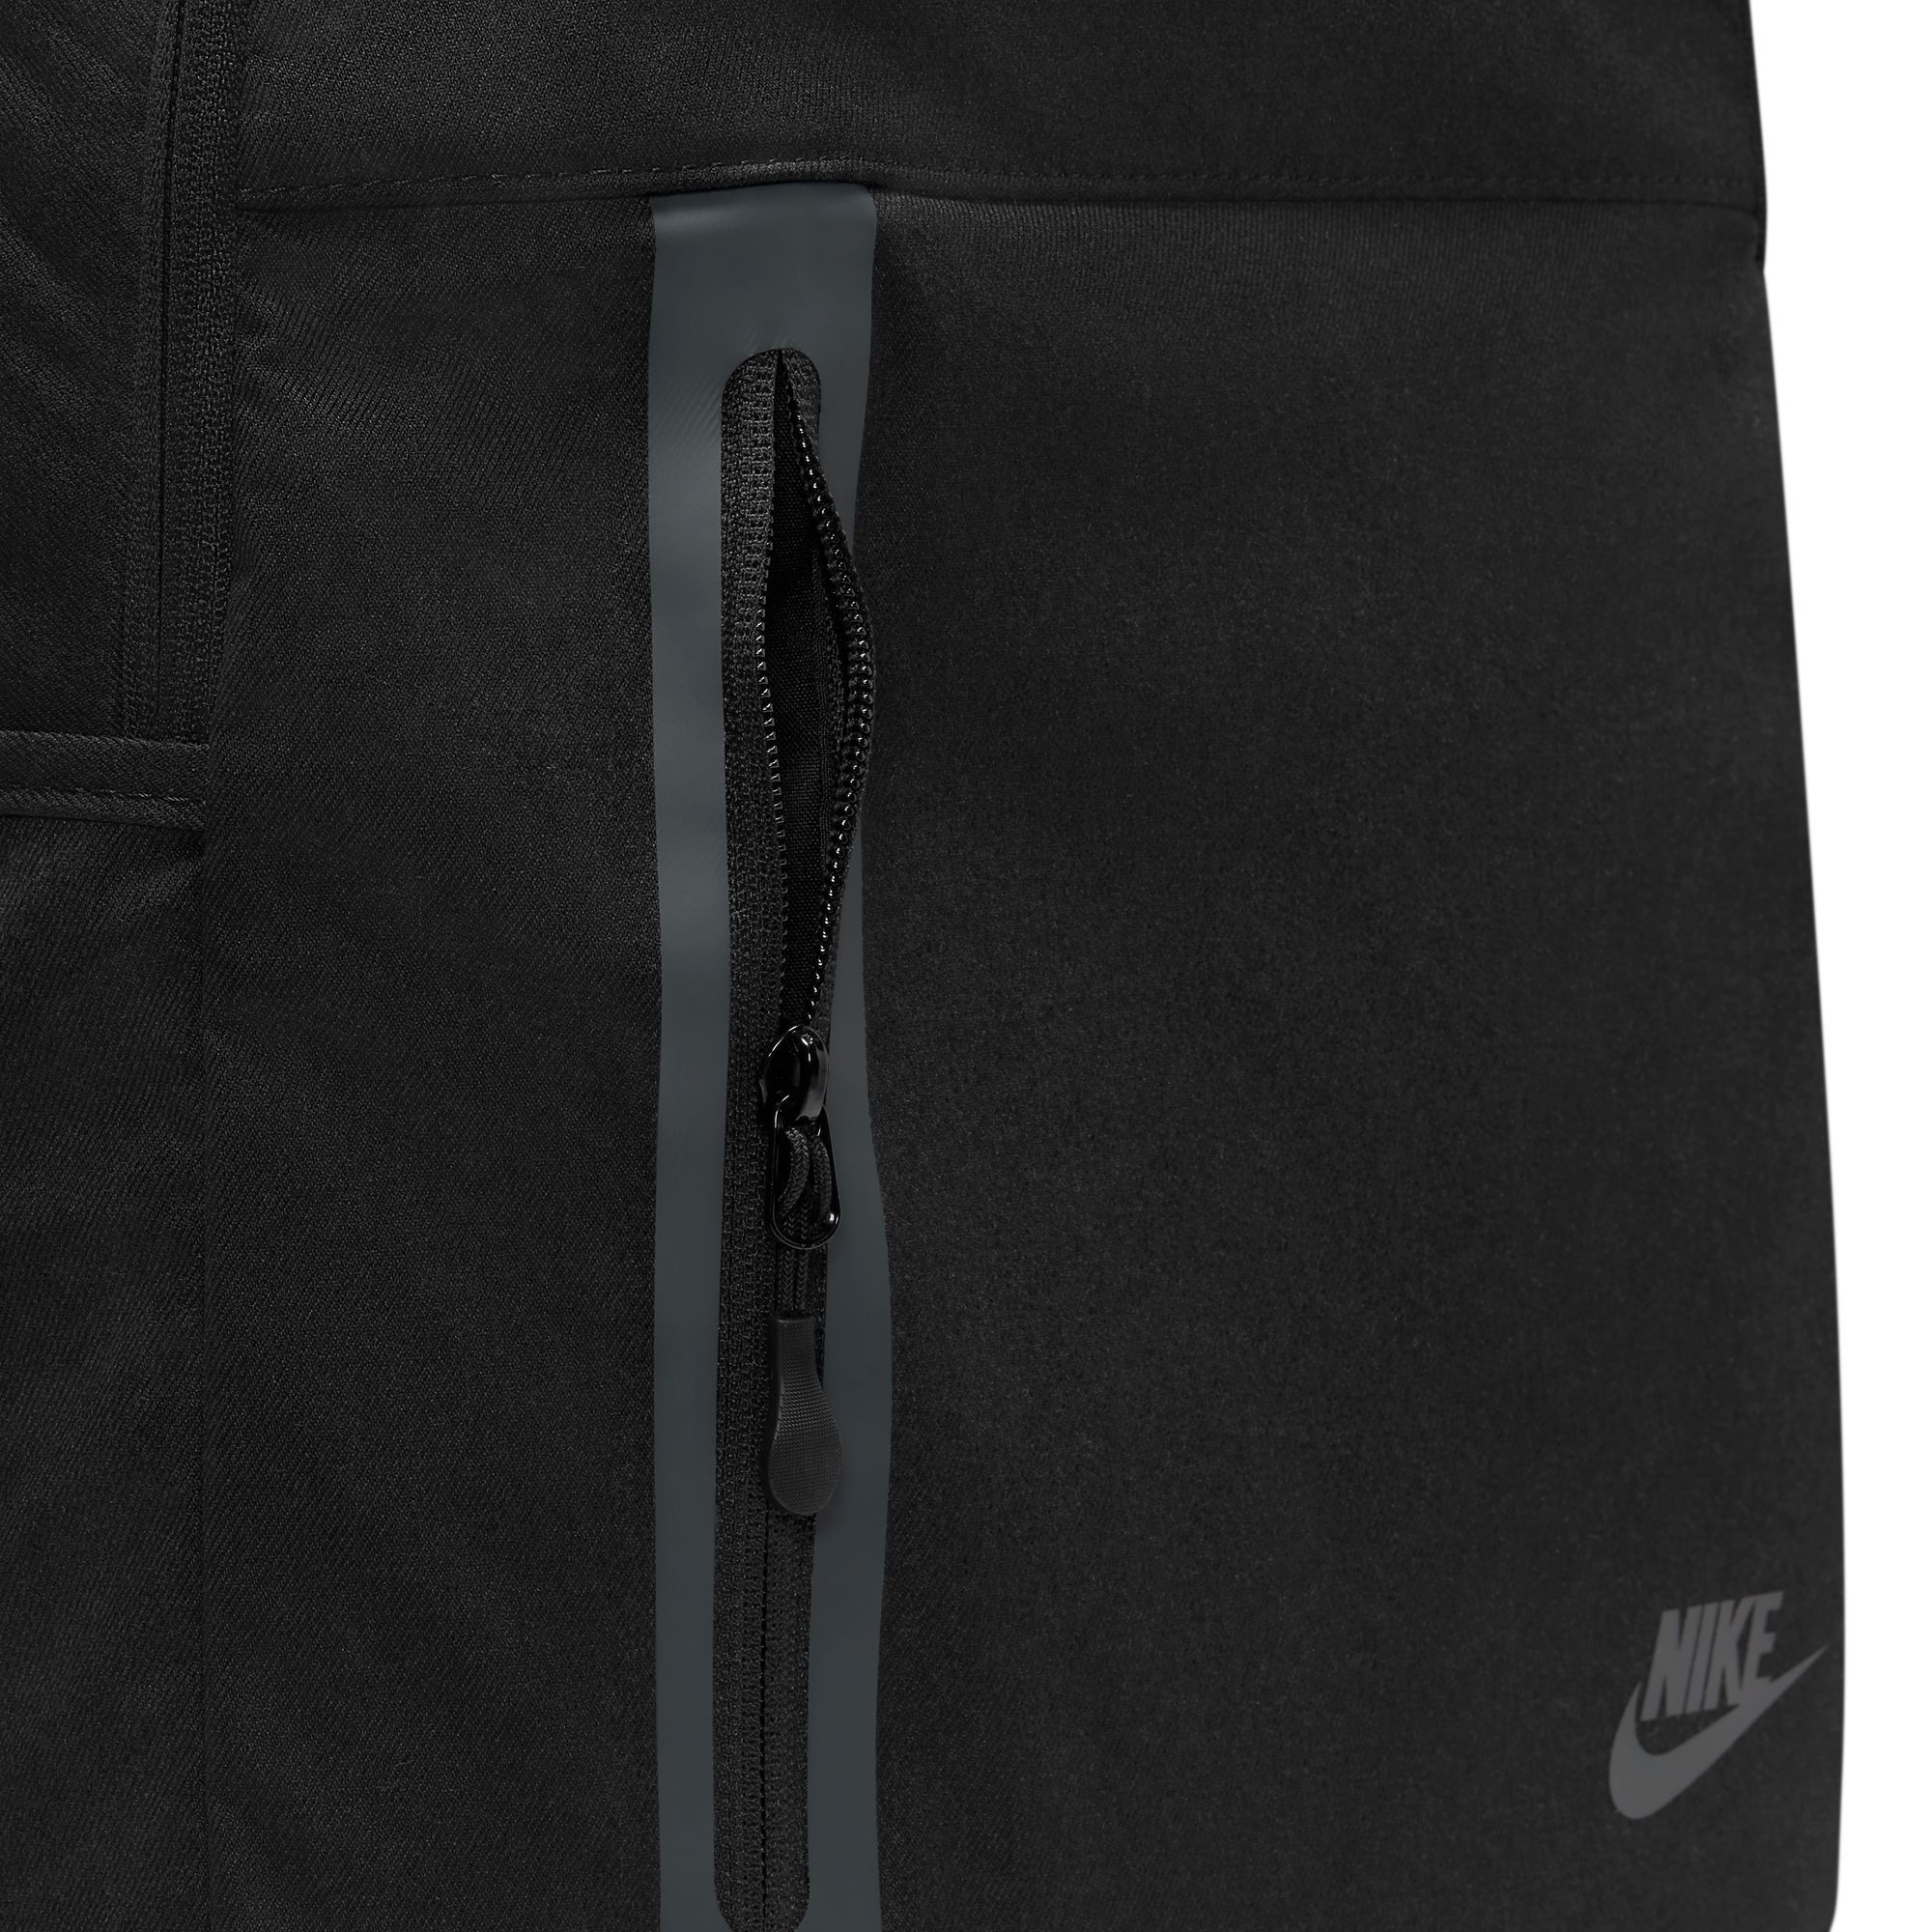 Nike Futura X 3 Brand Daypack - Black - One Size (21L)